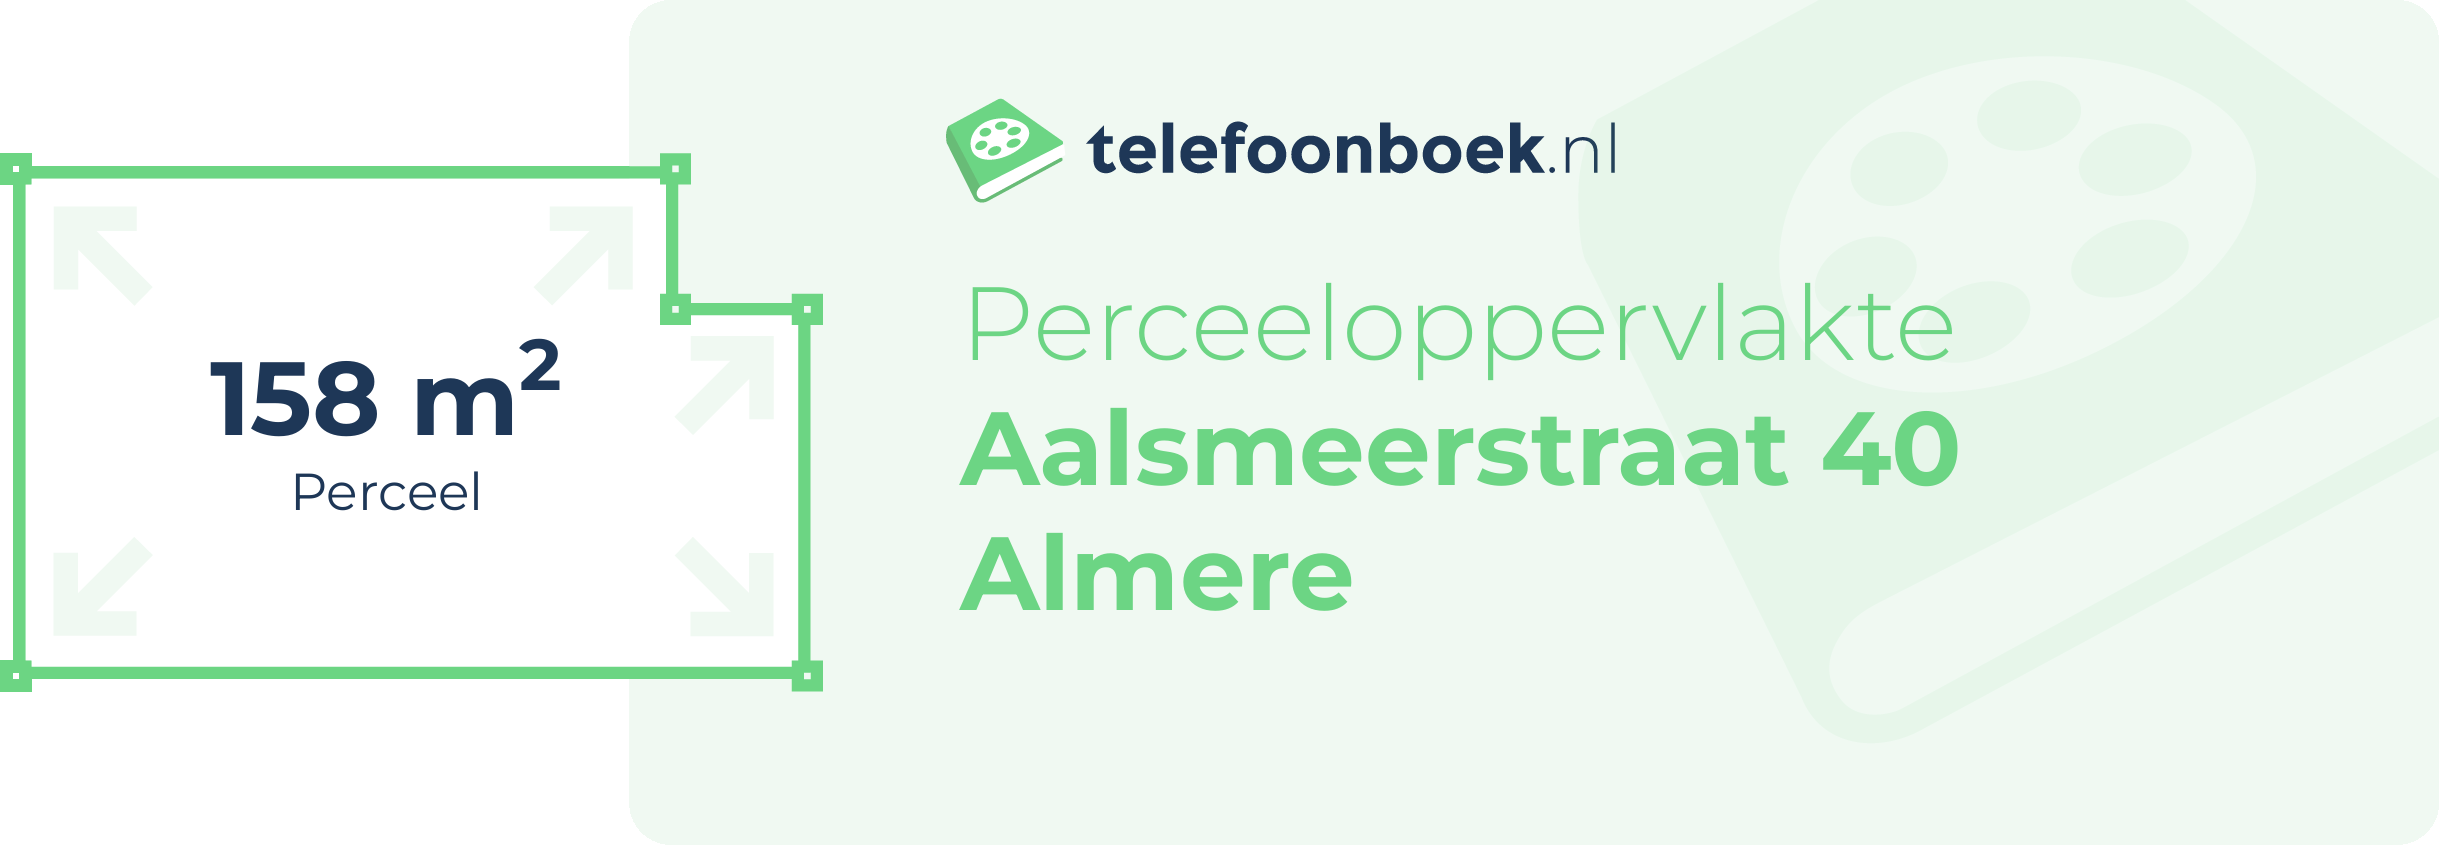 Perceeloppervlakte Aalsmeerstraat 40 Almere